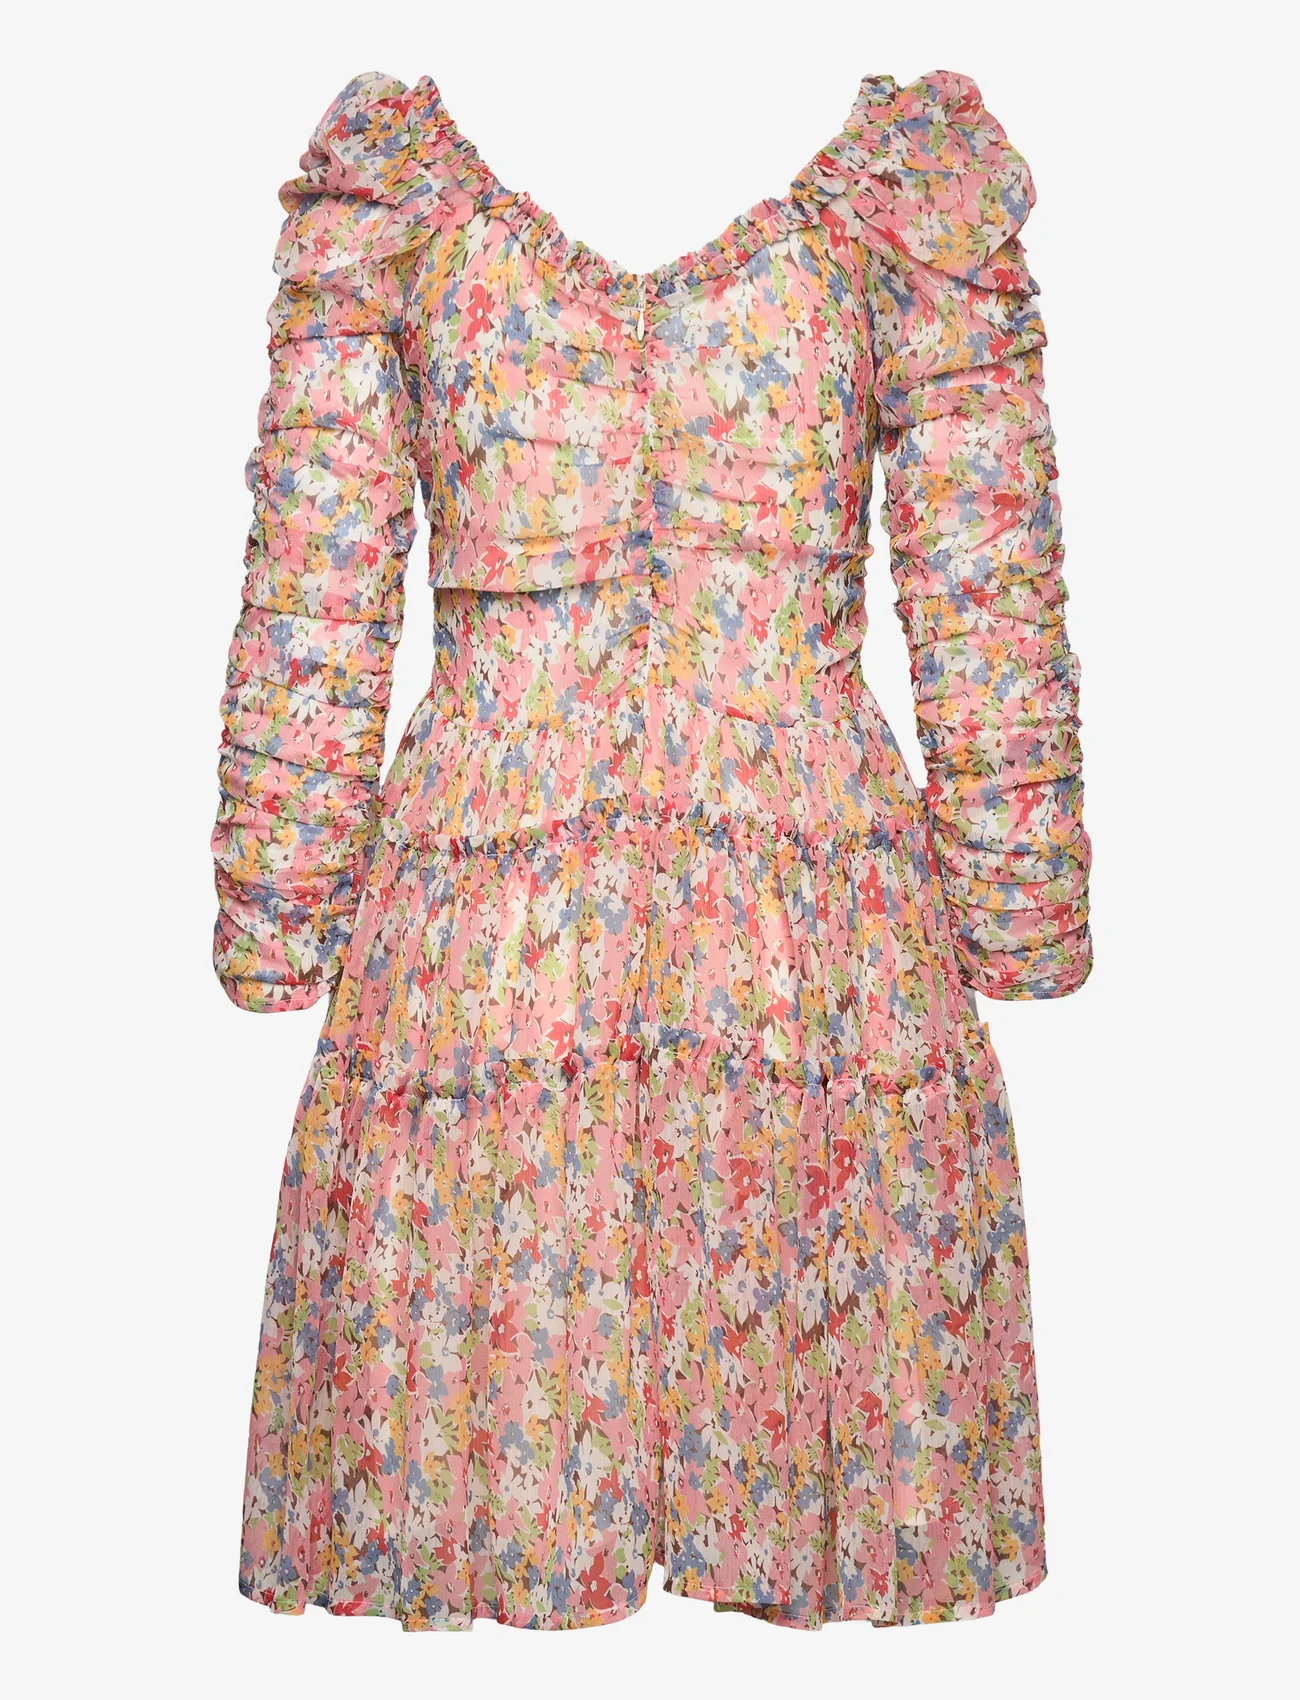 by Ti Mo - Chiffon Mini Dress - feestelijke kleding voor outlet-prijzen - 456 - blooming - 1